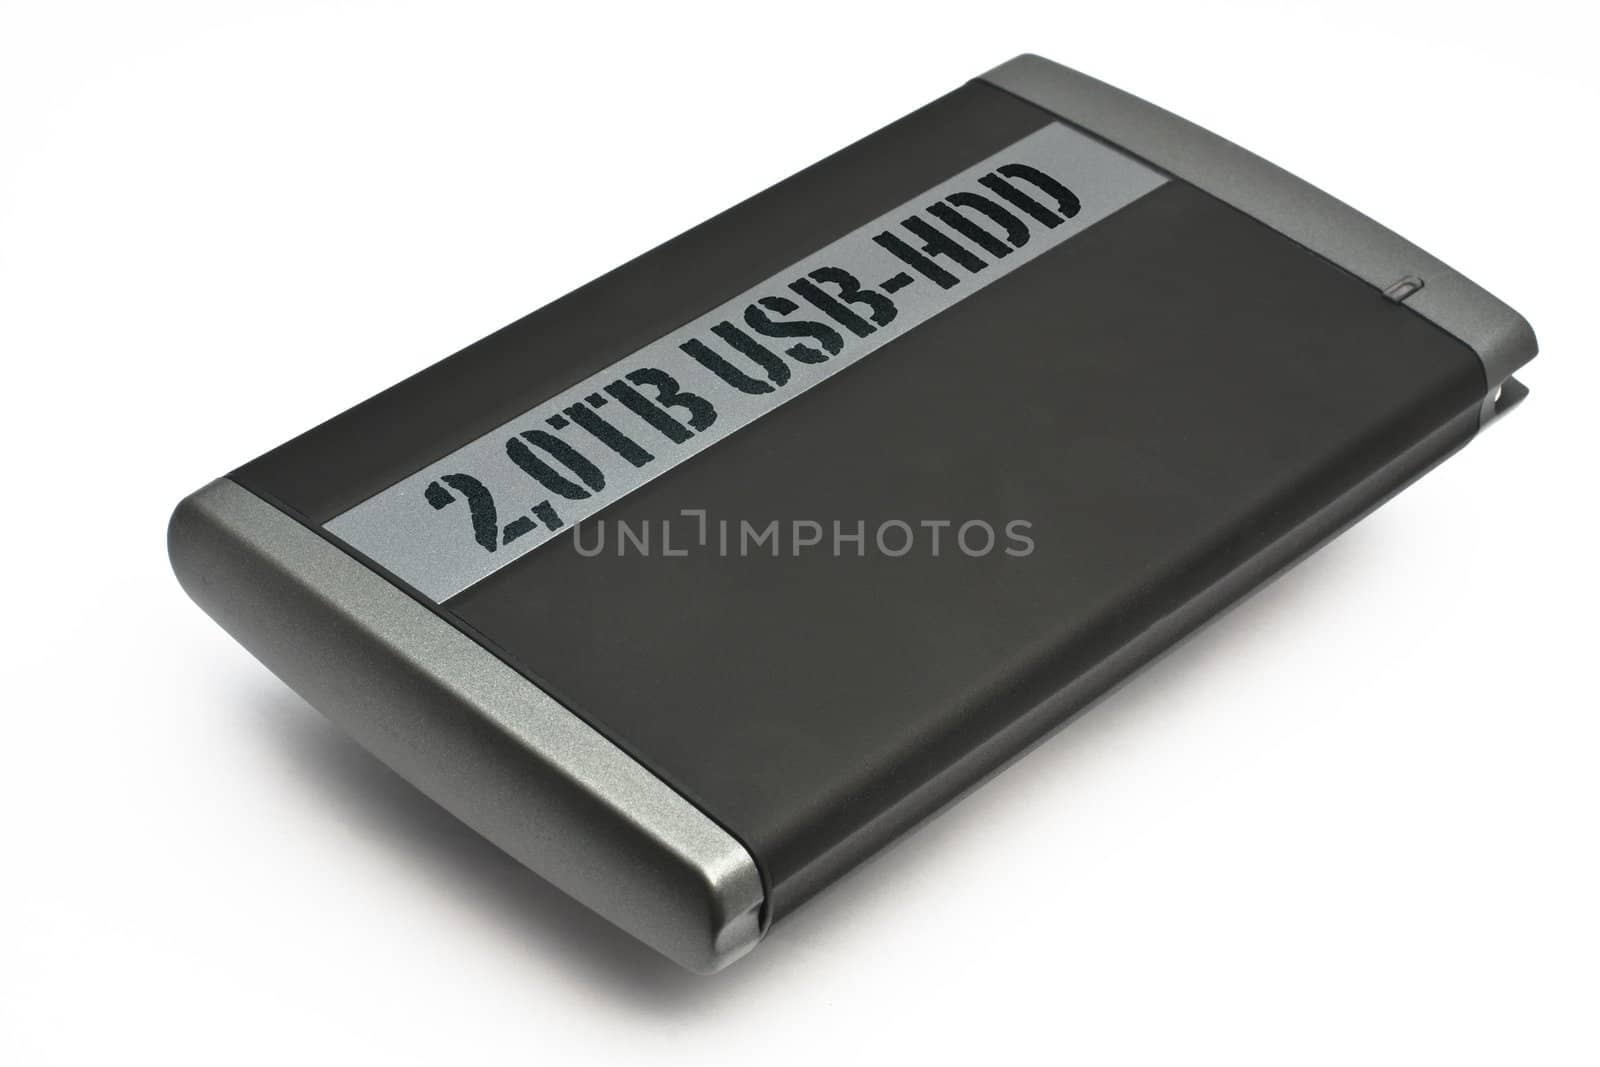 Extrnal USB Hard Disk Drive by gewoldi